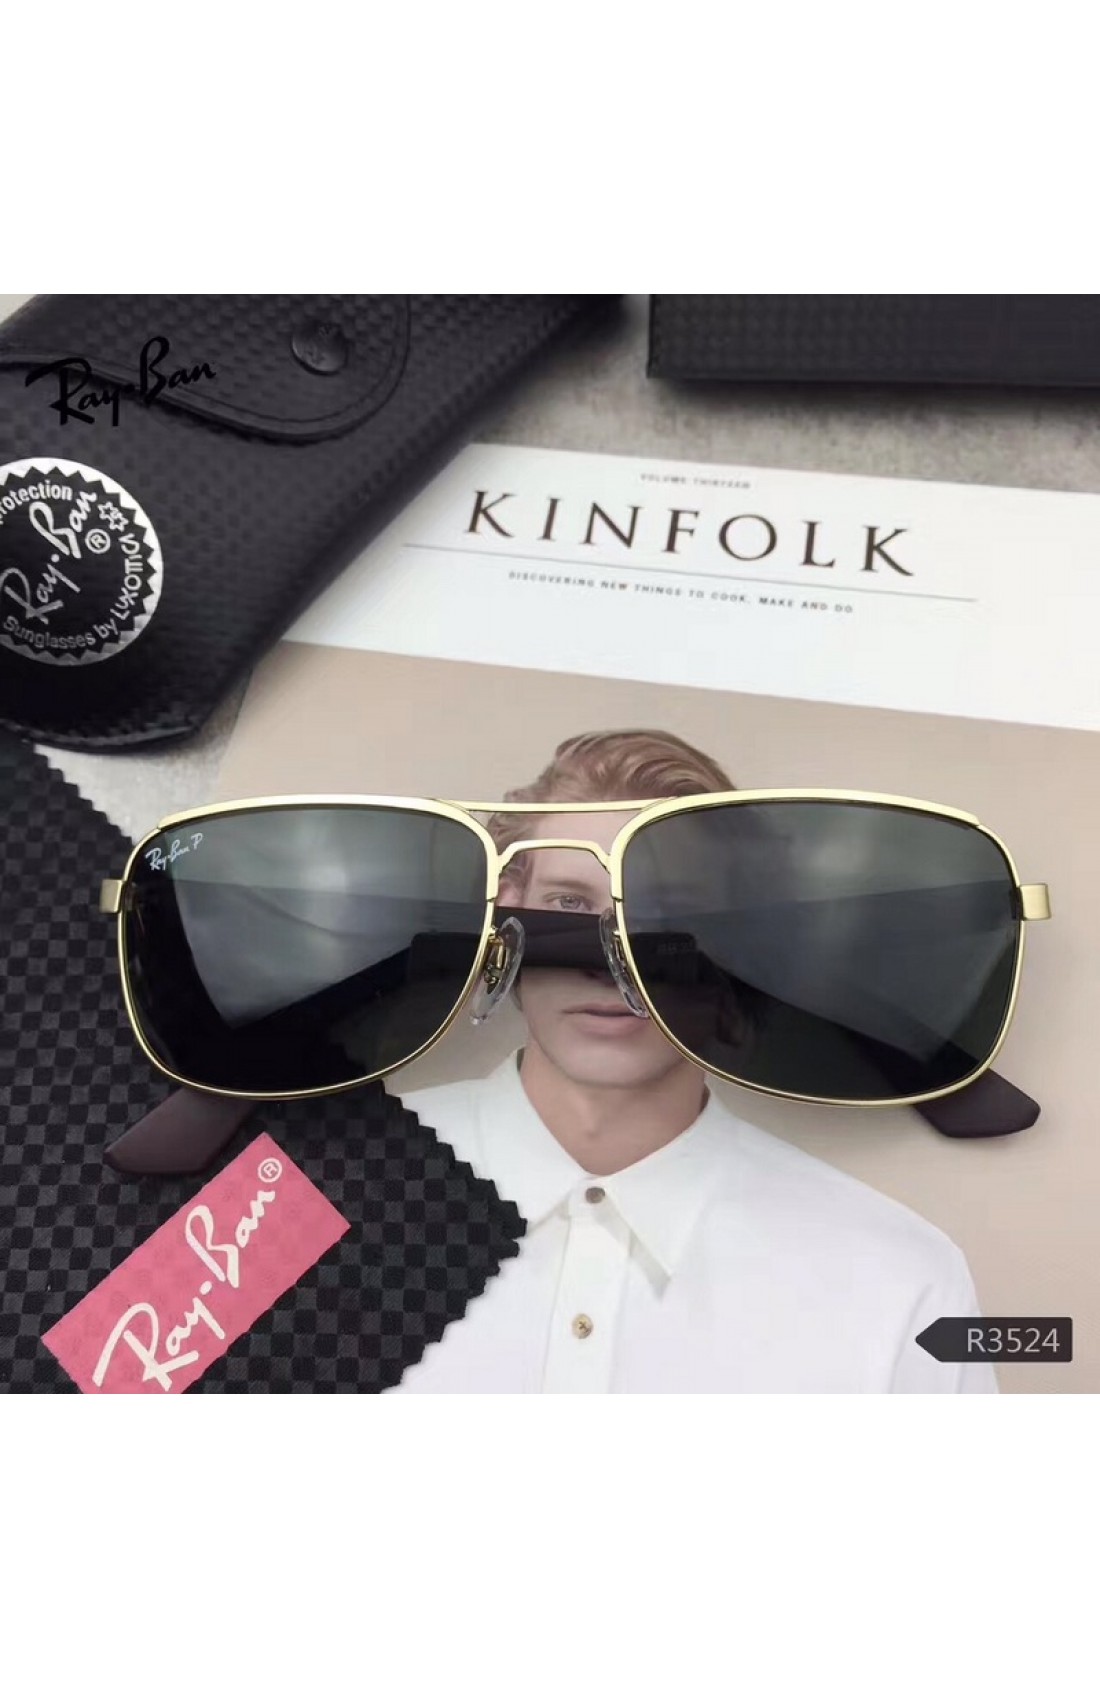 Warehouse Sale Men S Women S Ray Ban Polarized Sunglasses Black Gold